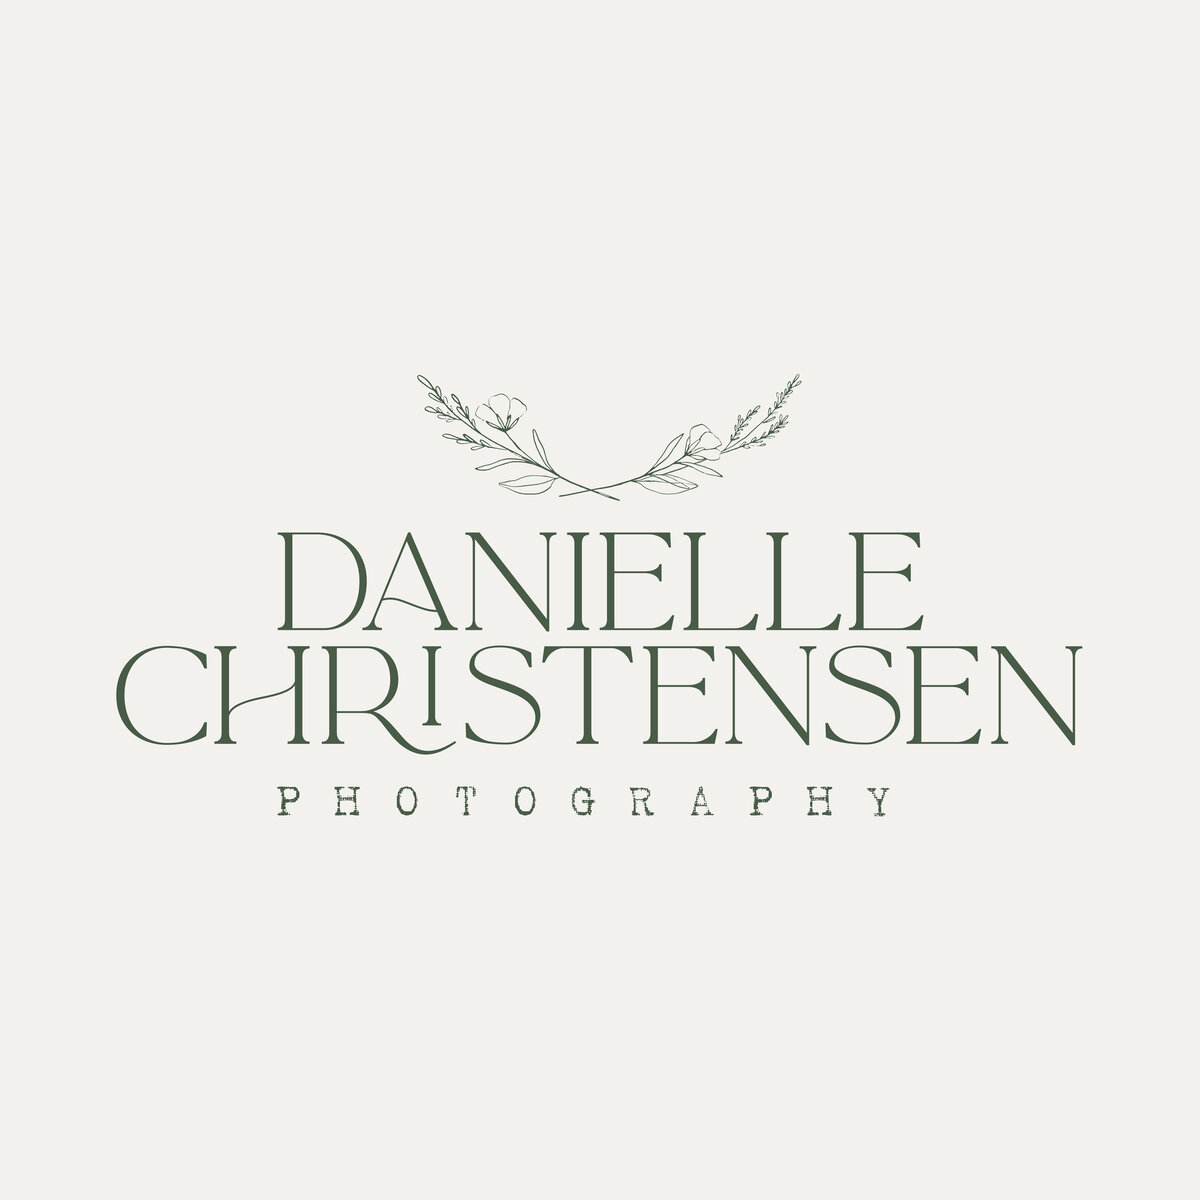 Danielle Christensen